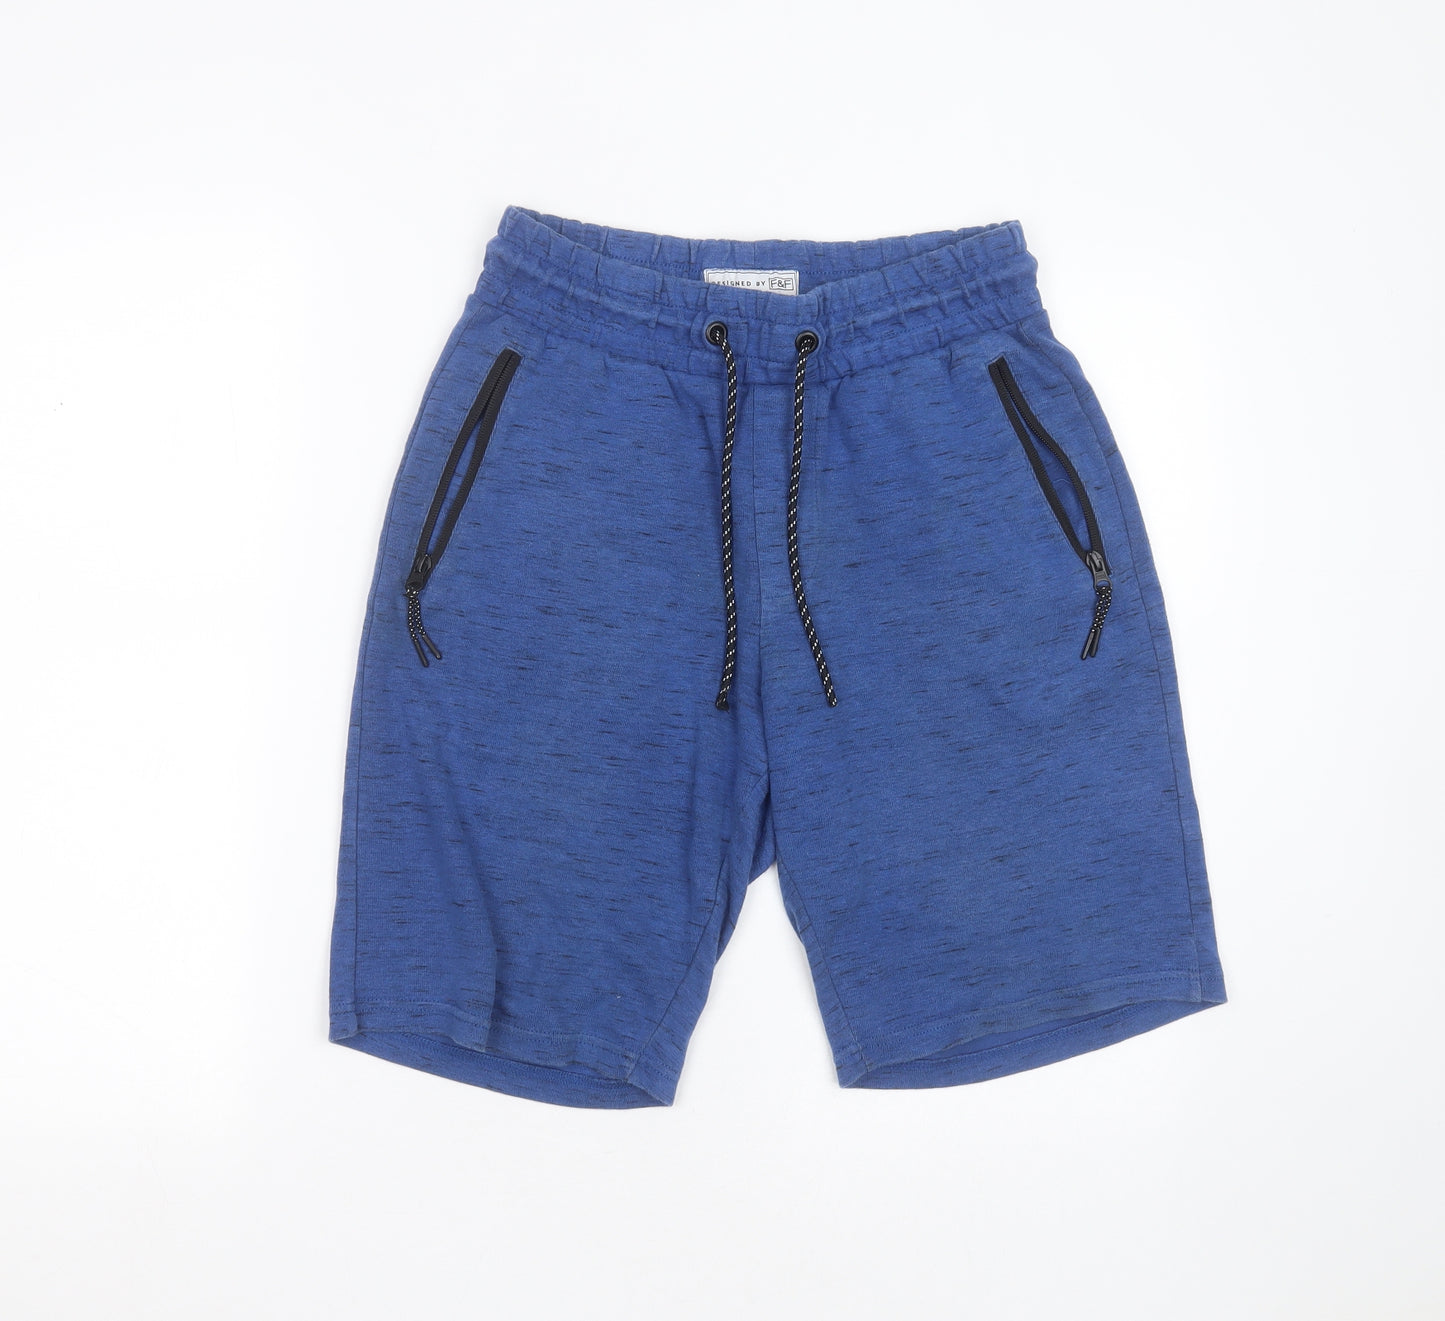 F&F Boys Blue  Cotton Sweat Shorts Size S L10 in Regular Drawstring